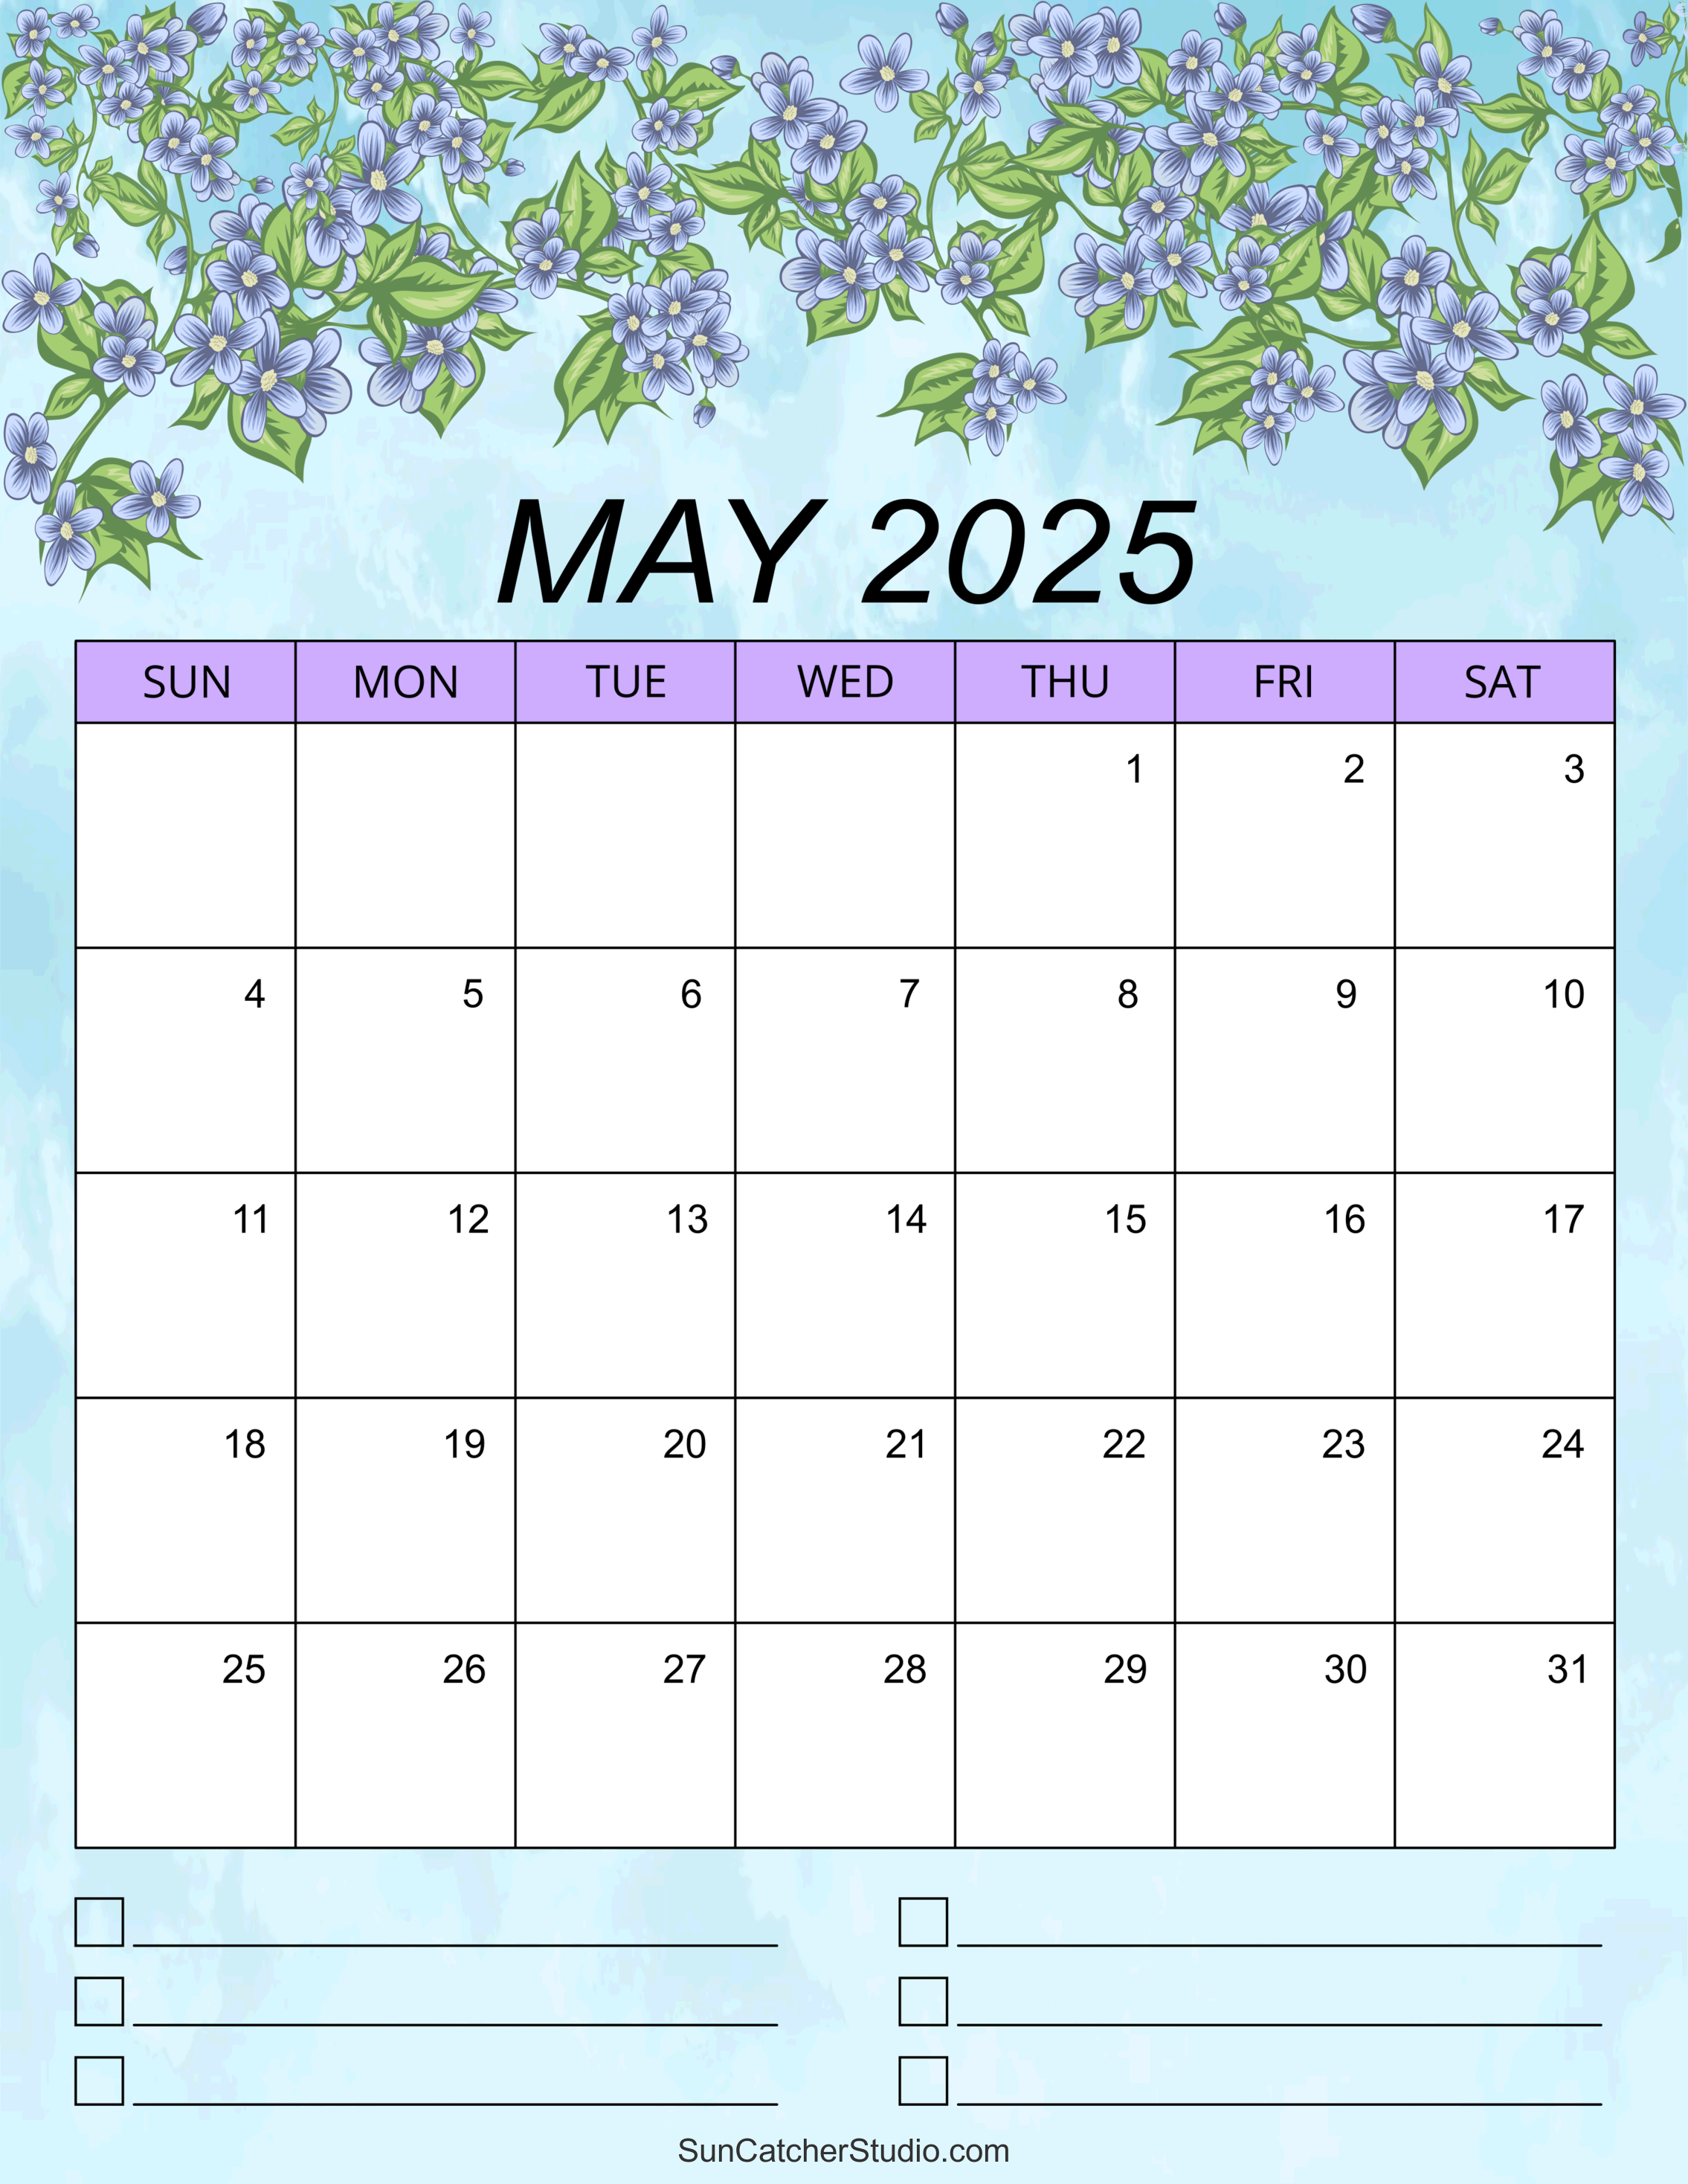 May 2025 Calendar (Free Printable) DIY Projects Patterns Monograms